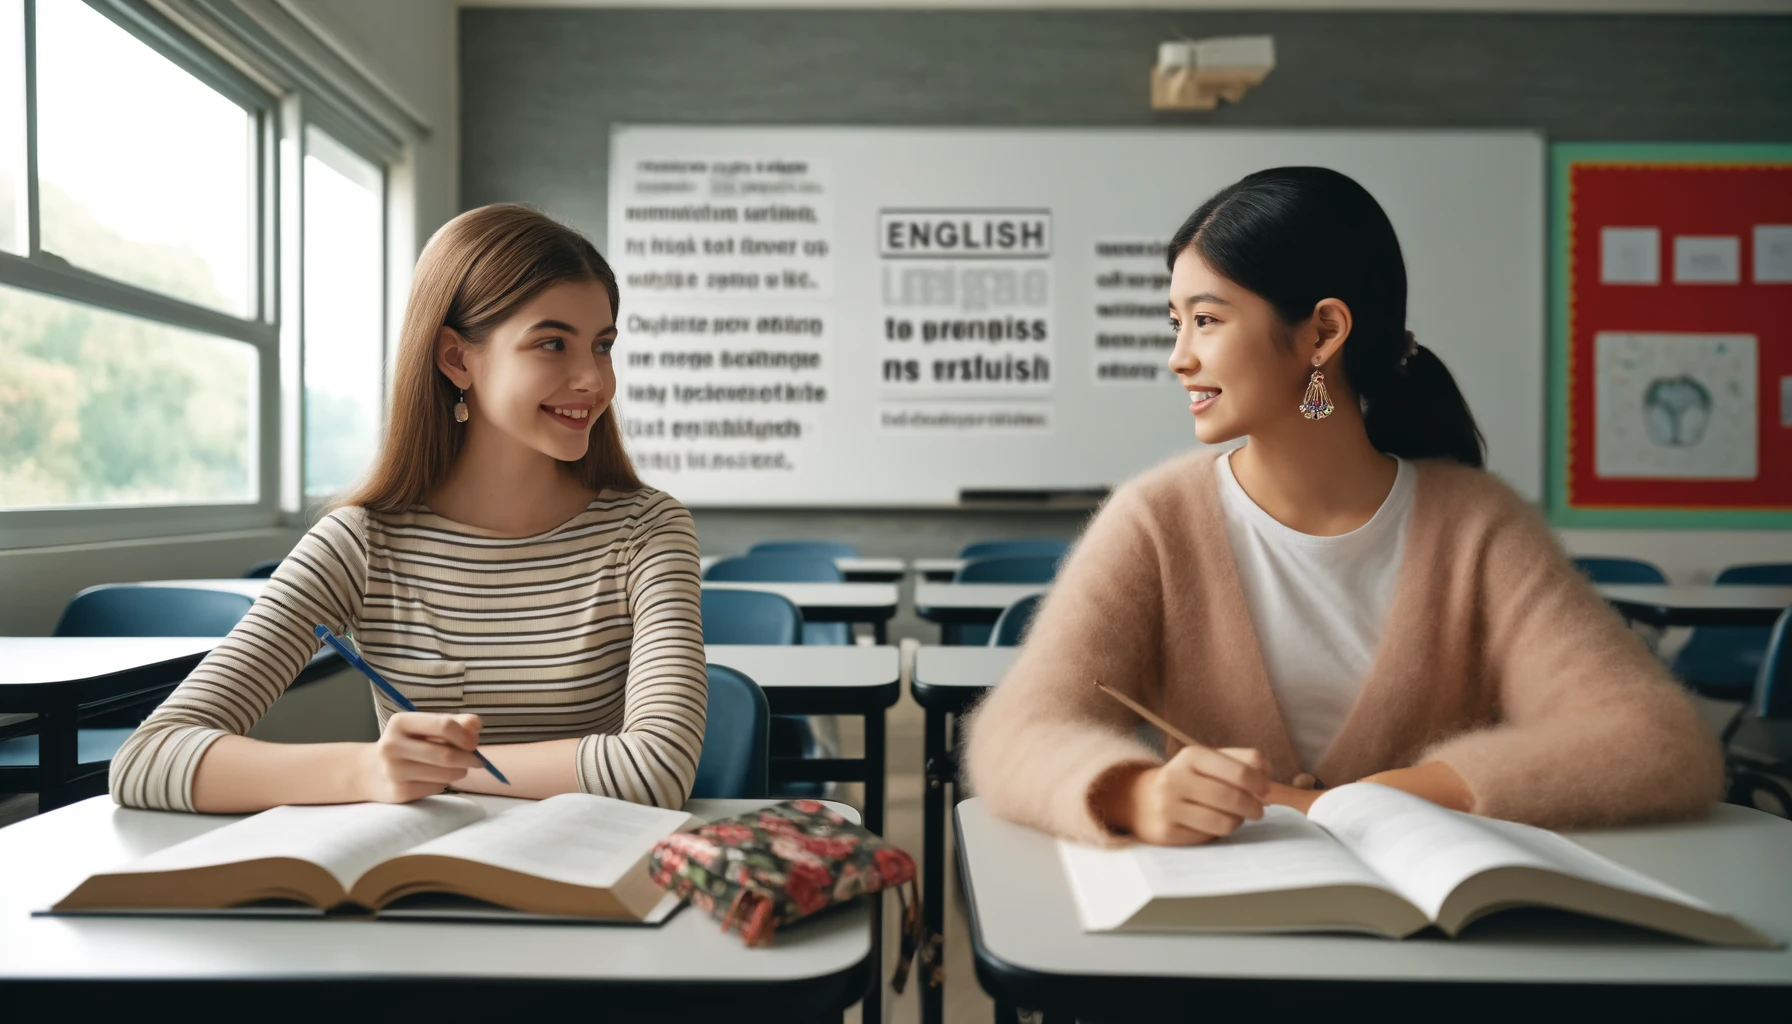 Practice Speaking – English for School